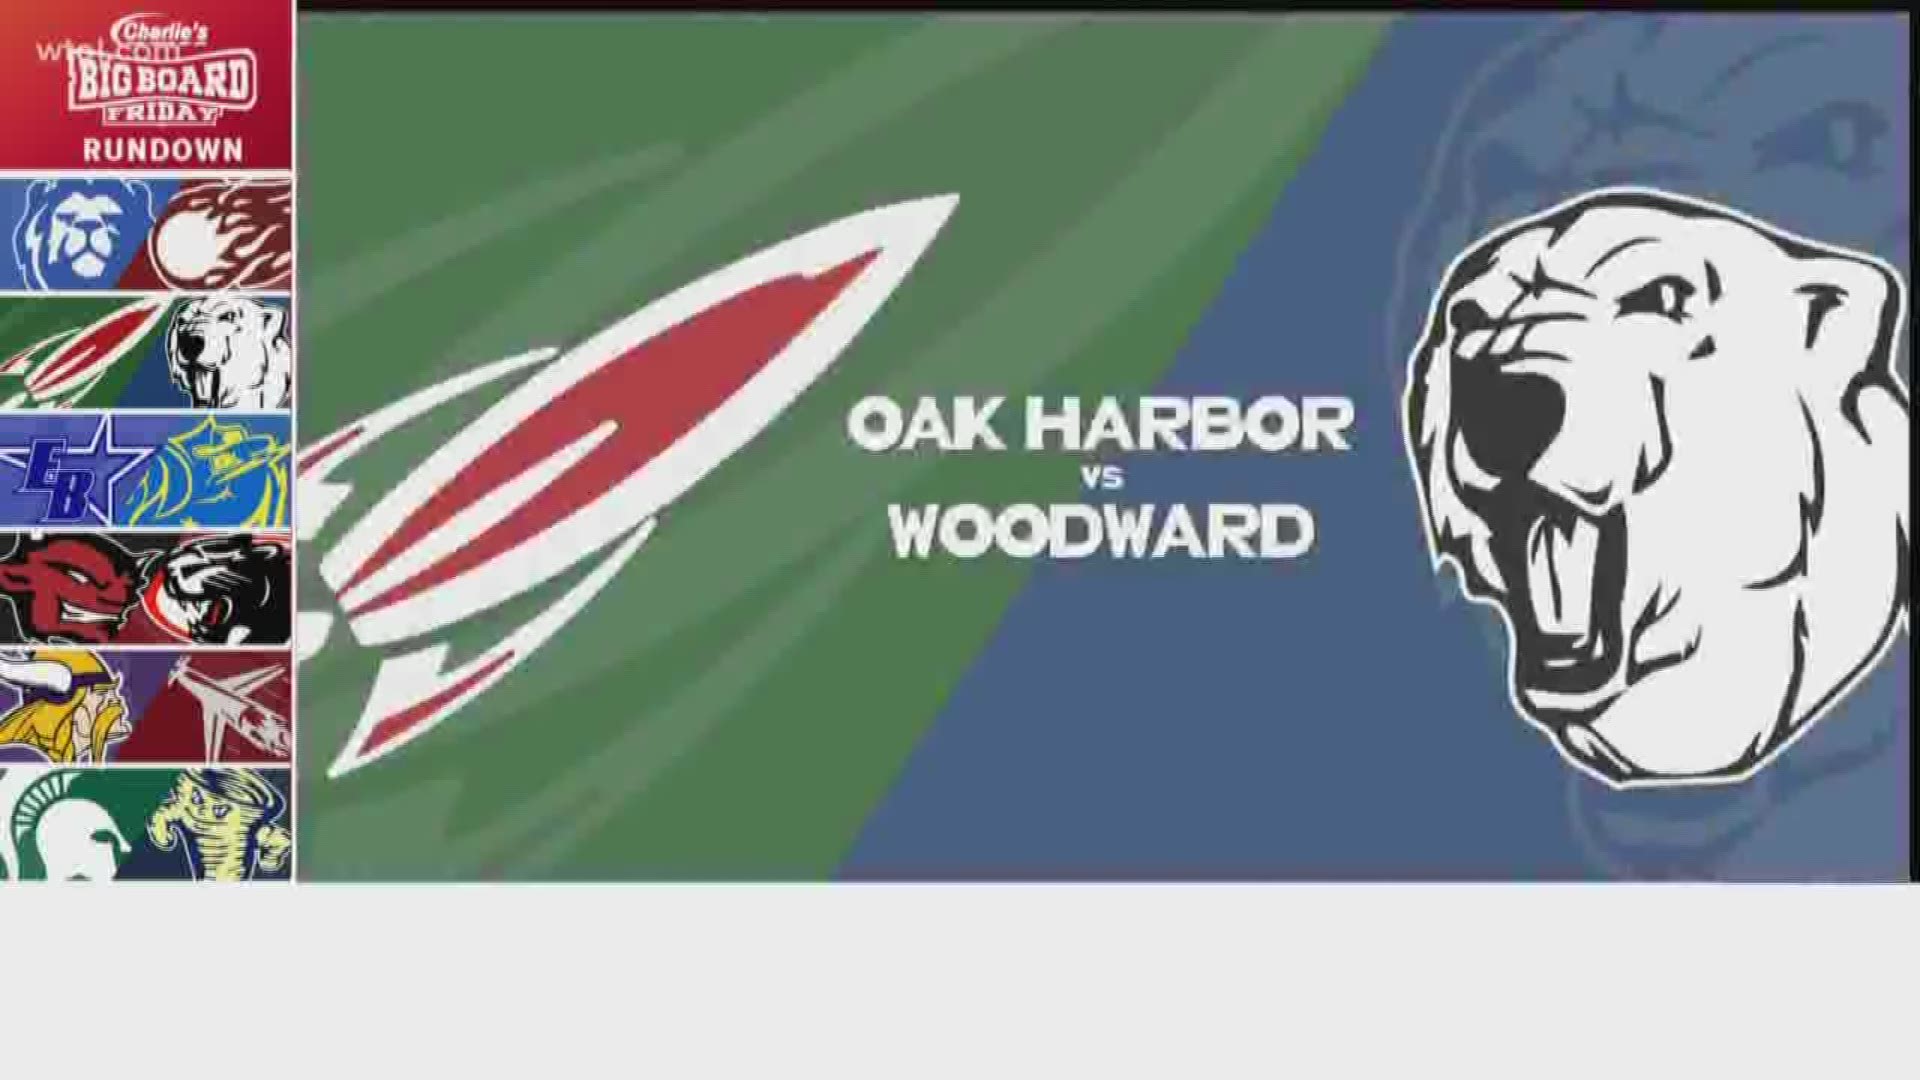 Oak Harbor wins 43-12